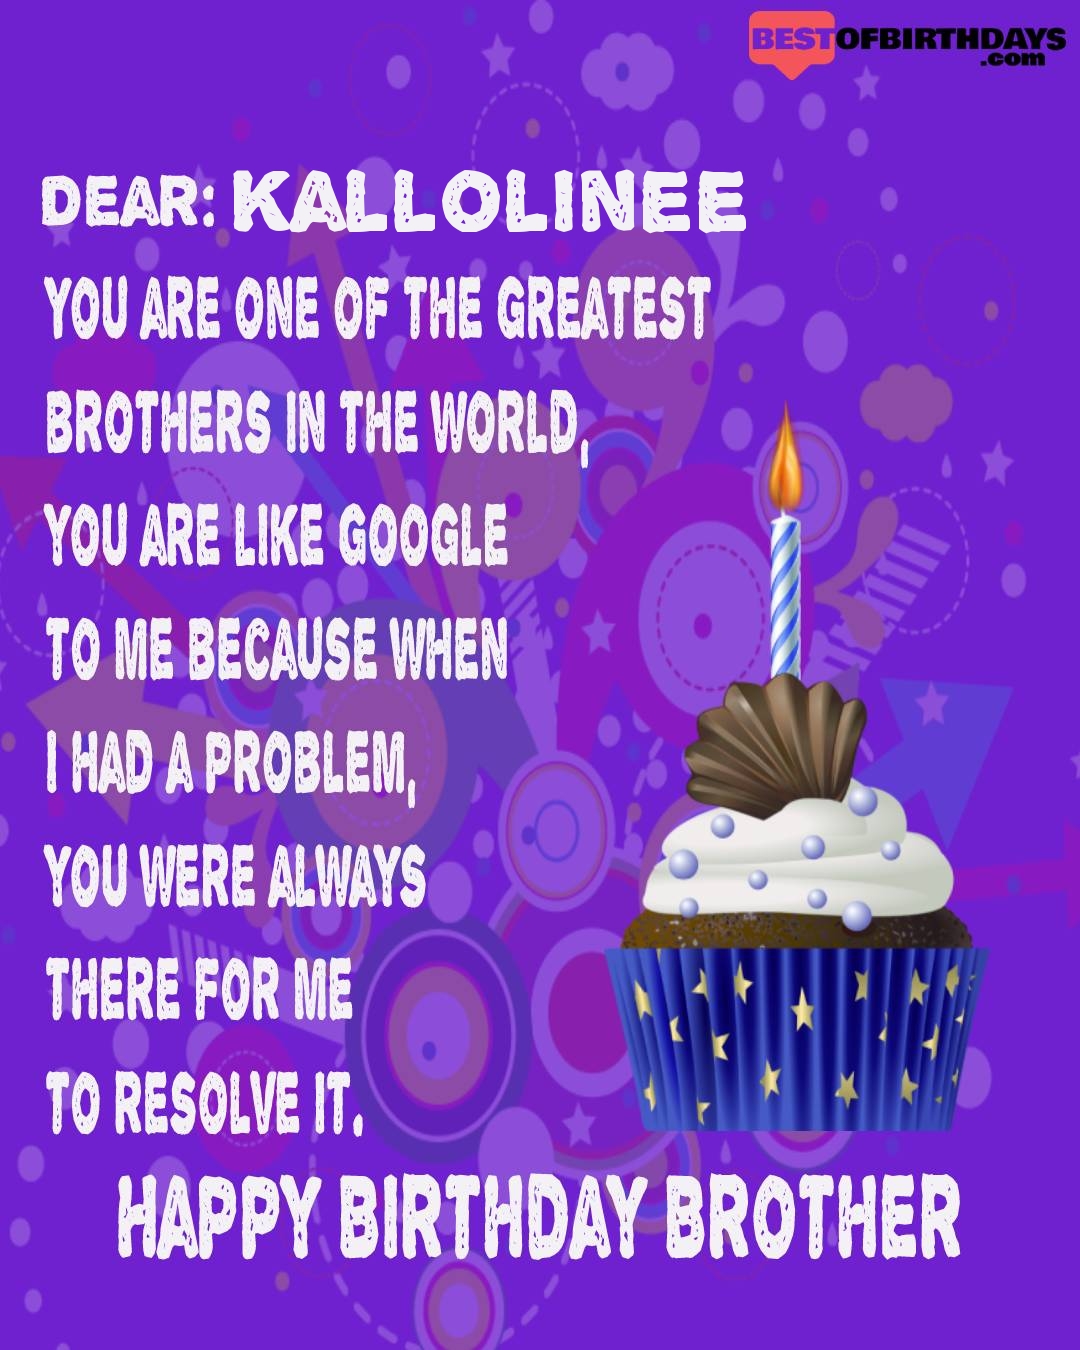 Happy birthday kallolinee bhai brother bro